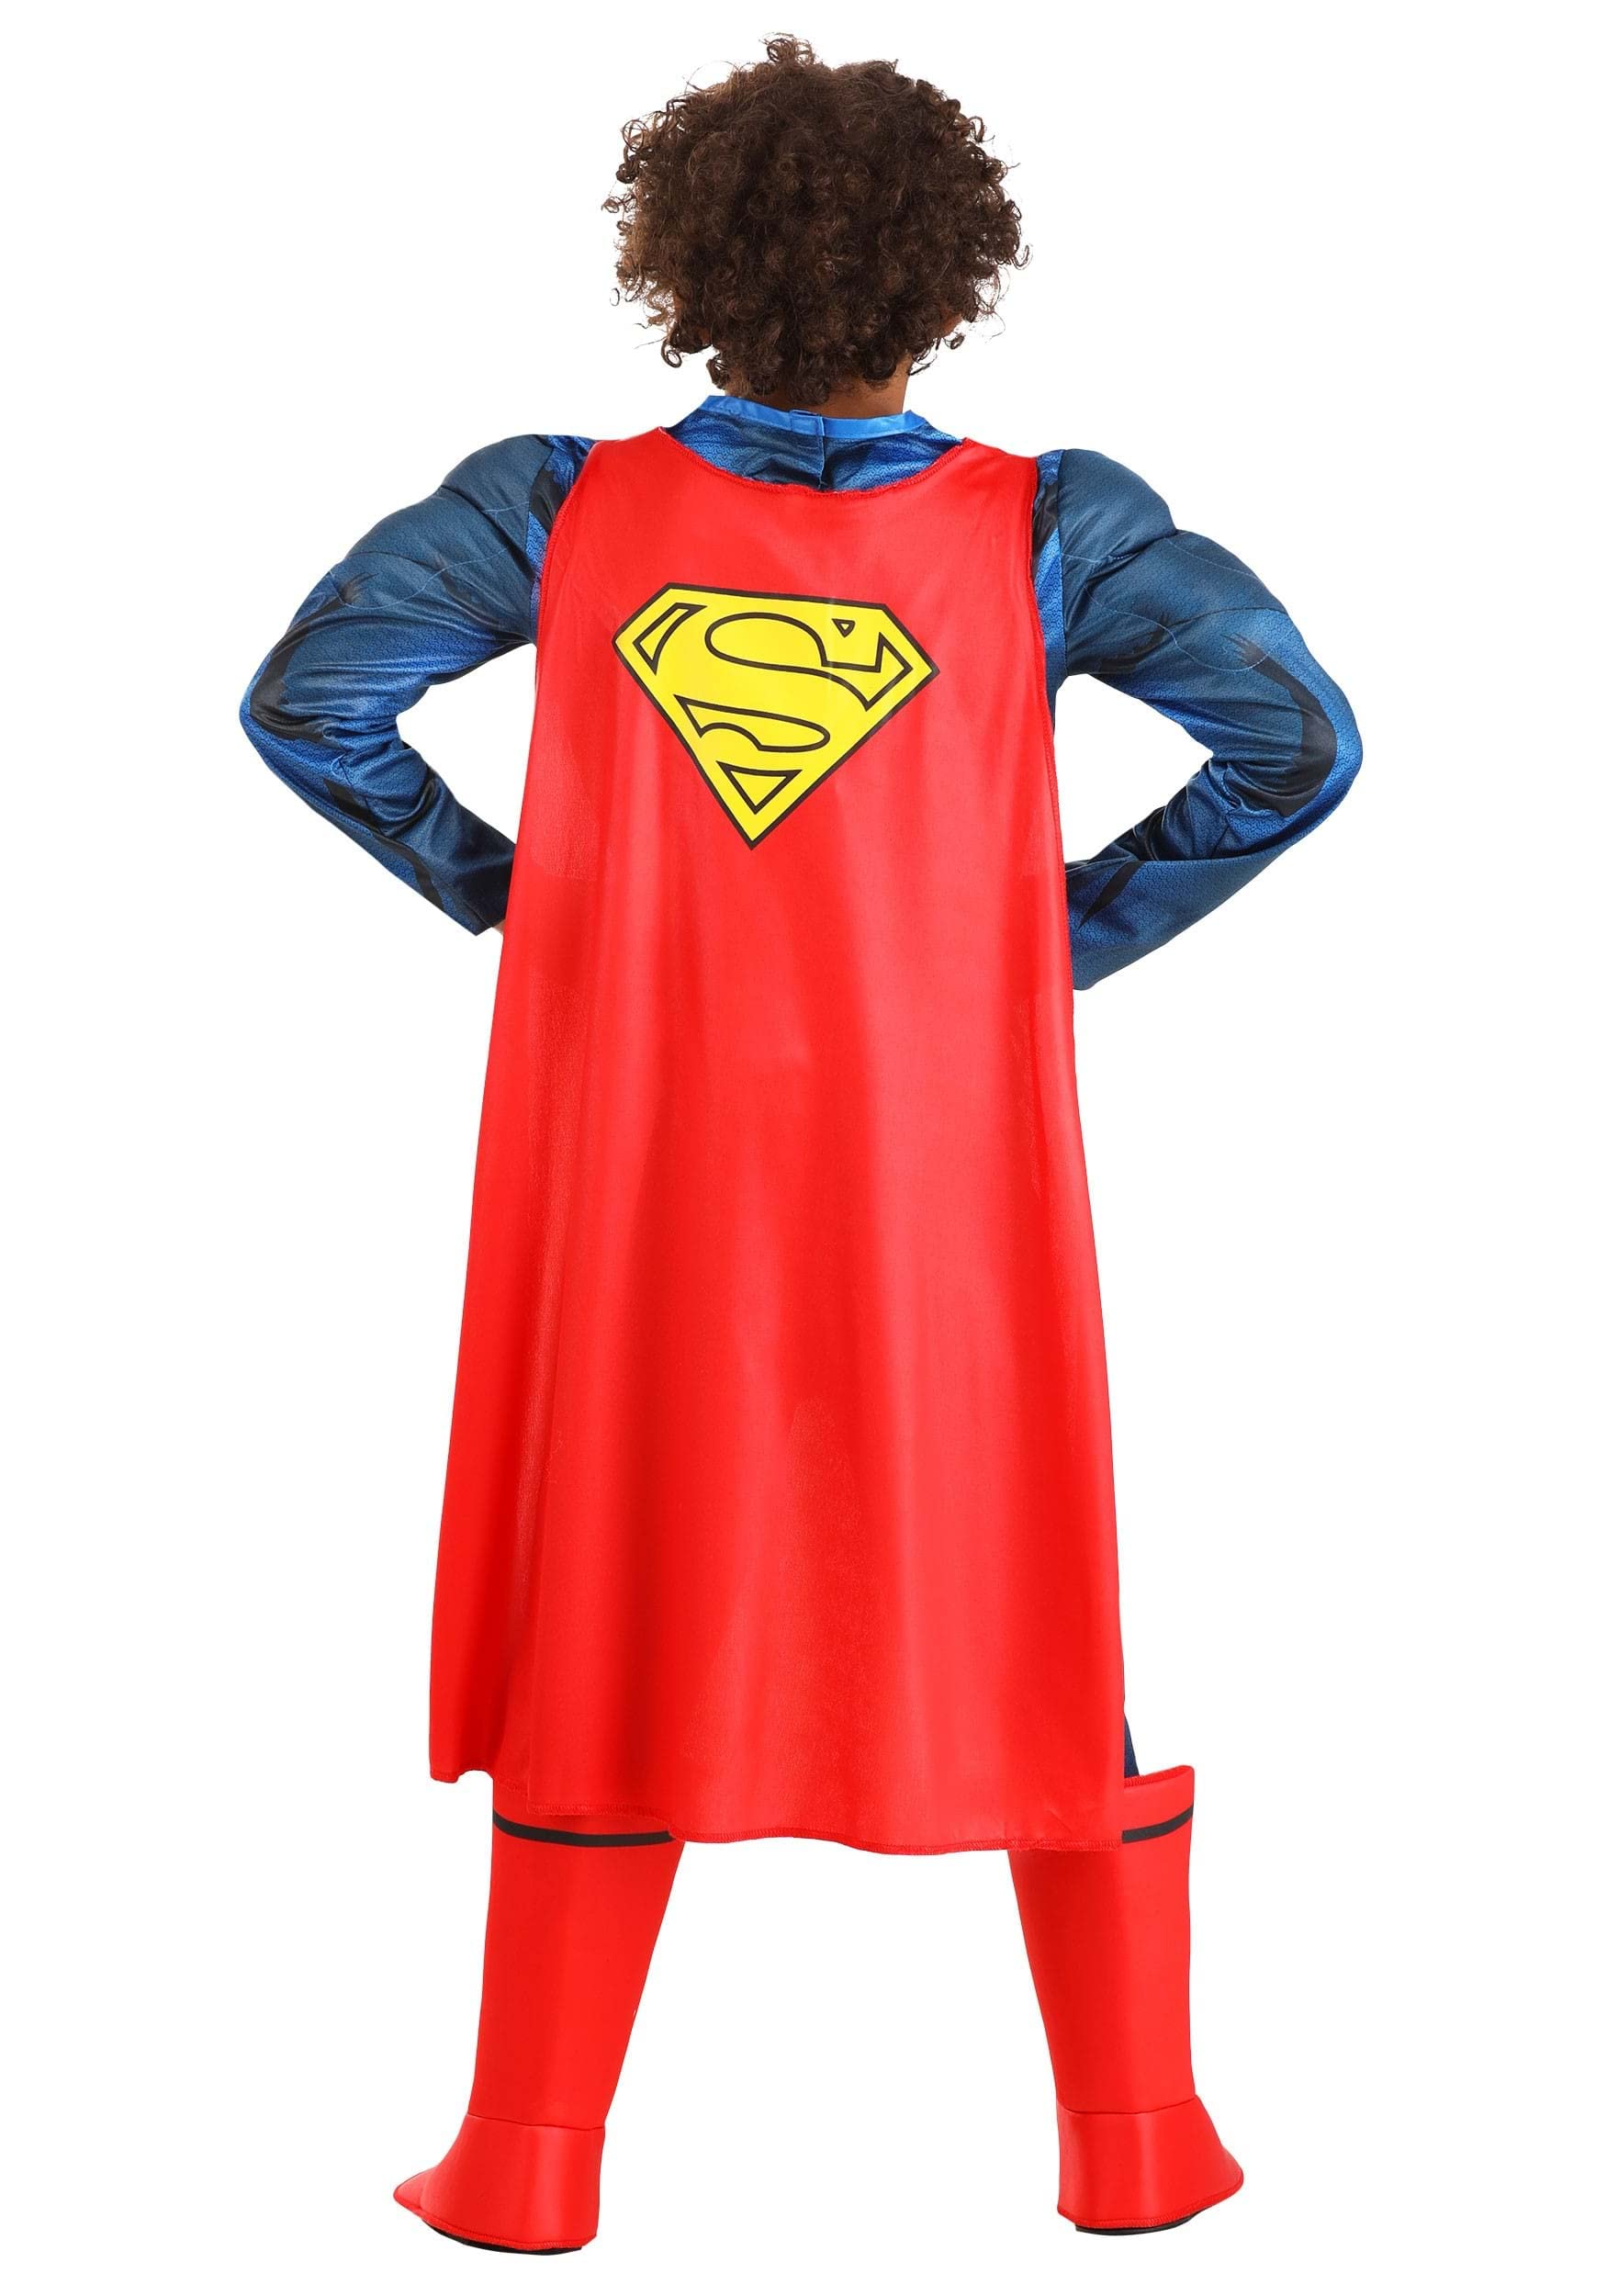 Deluxe DC Comics Superman Costume for Kids, Blue & Red Superhero Suit for Superhero Parties, Cosplay & Halloween